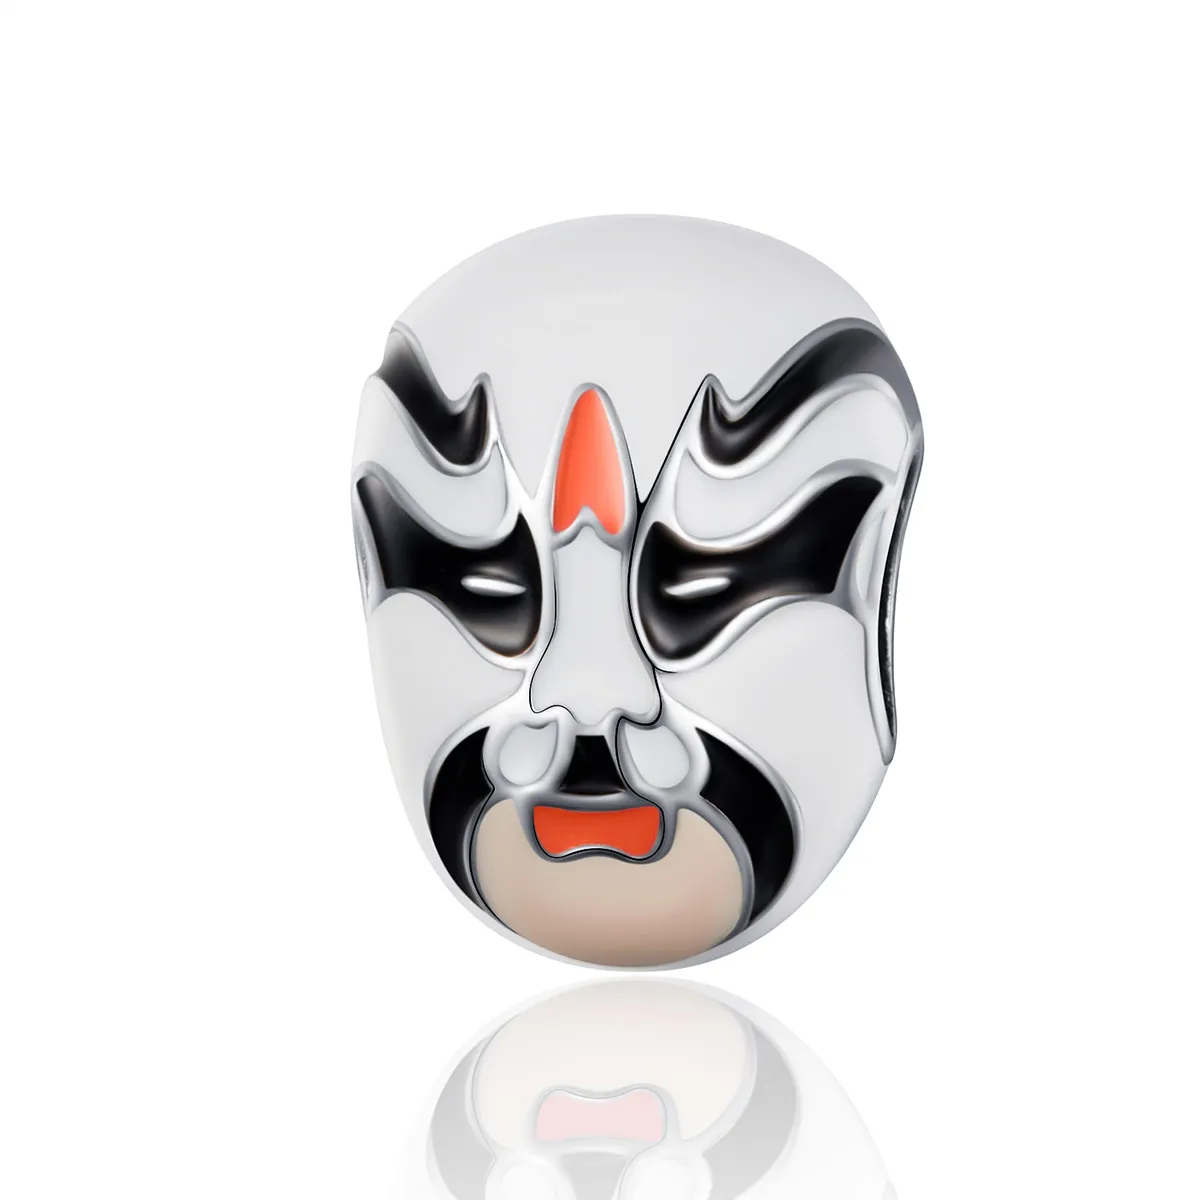 Pandora Style Silver Facial Makeup In Operas Charm - SCC1192